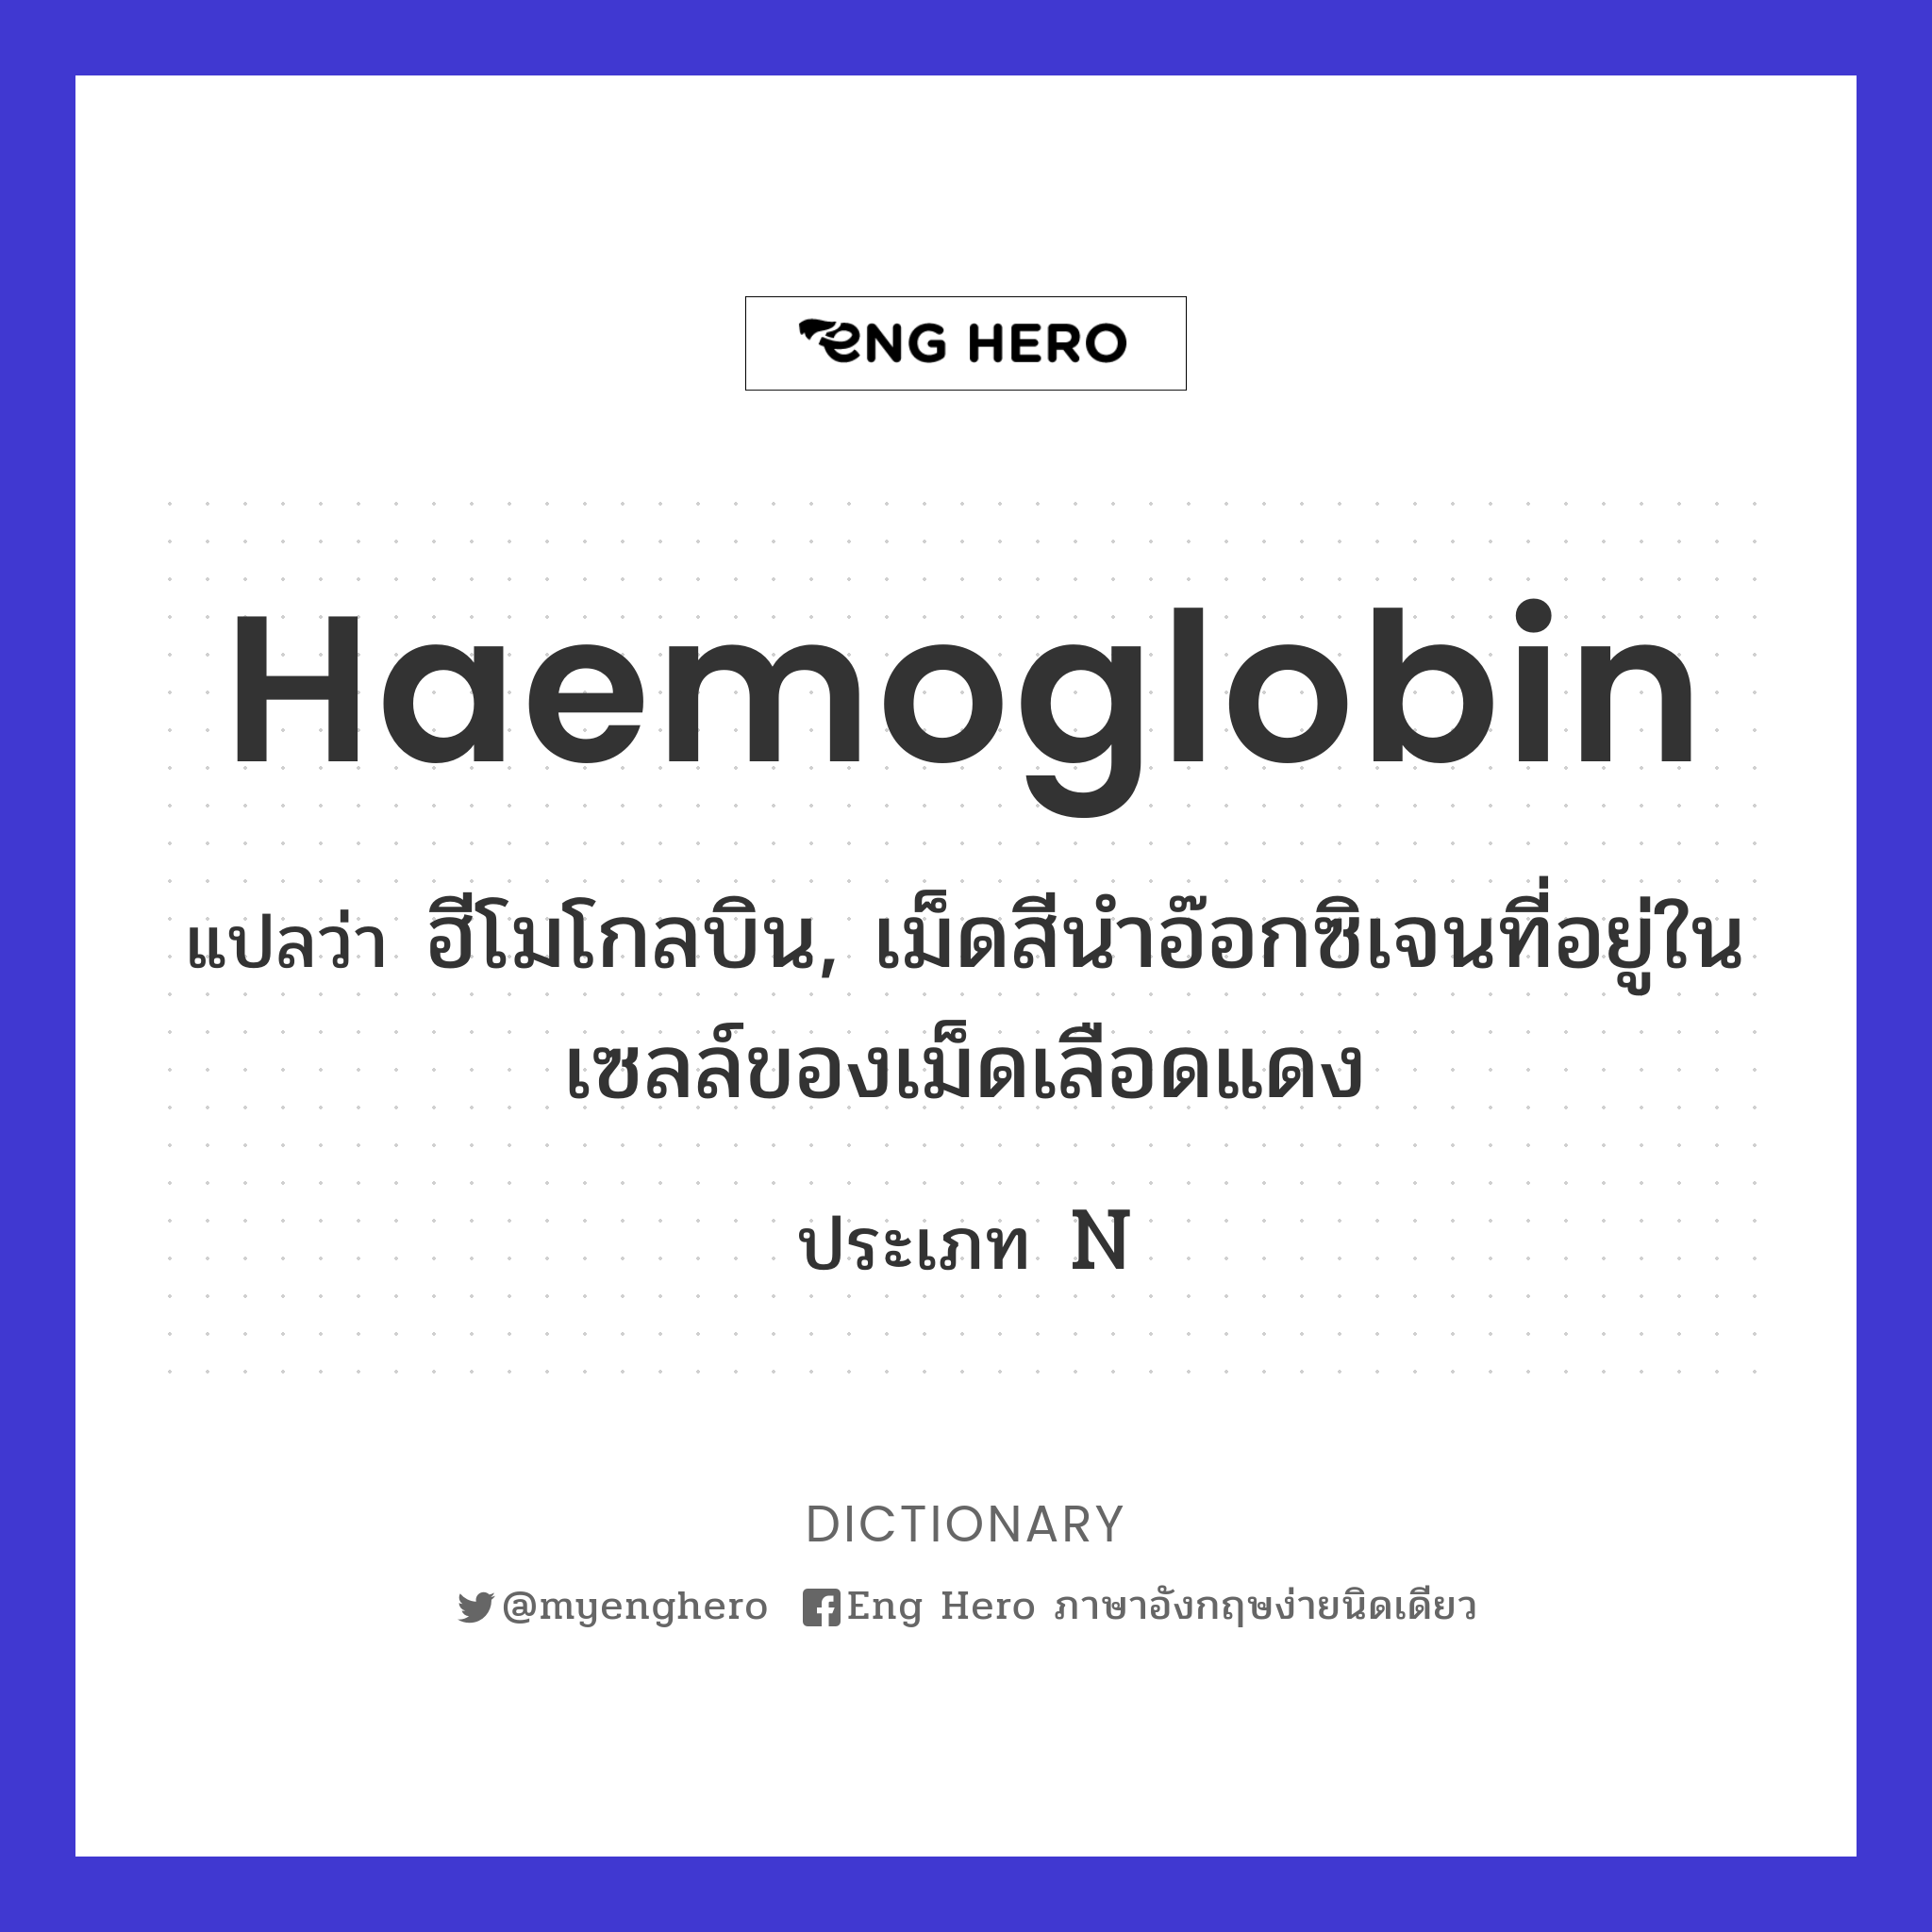 haemoglobin